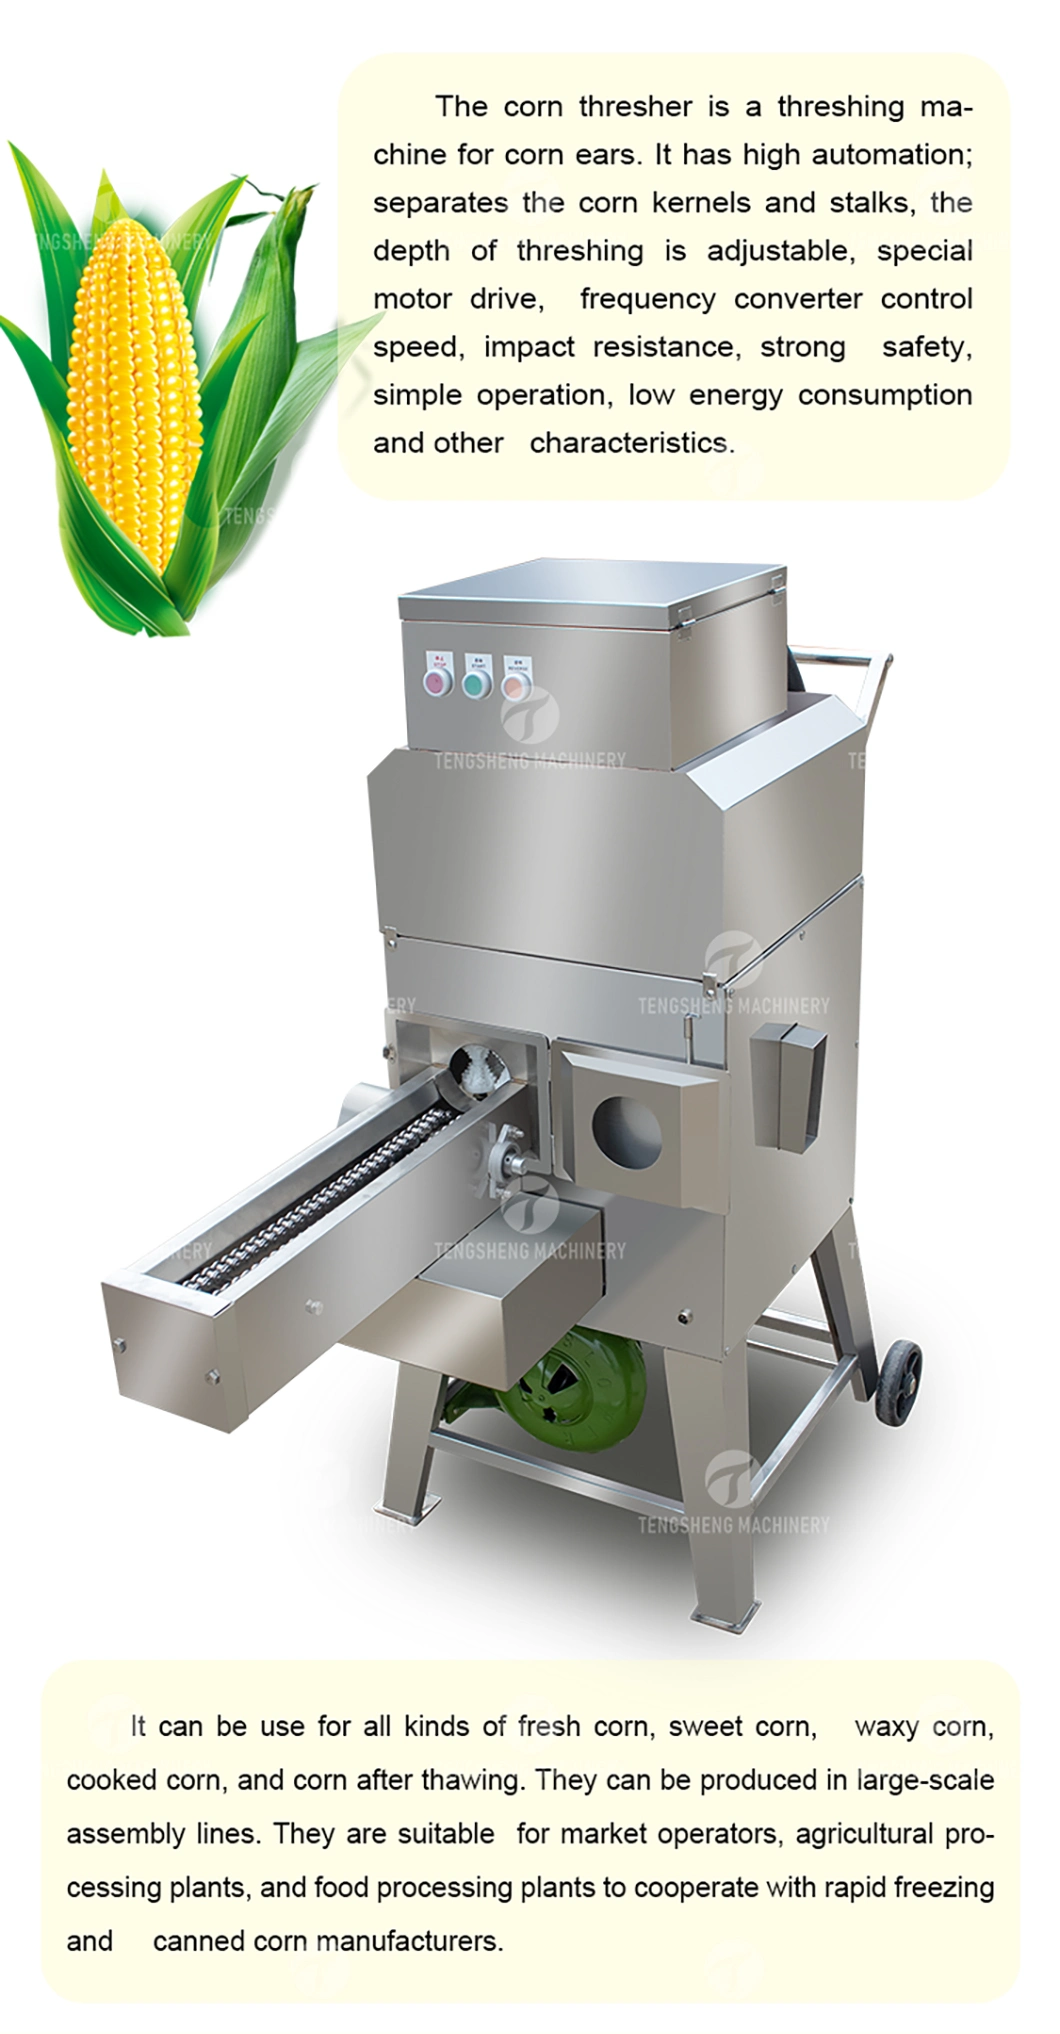 Tengsheng Corn Threshing Machine Sweet Corn Threshing Machine Corn Grain Production Machine (TS-W168L)